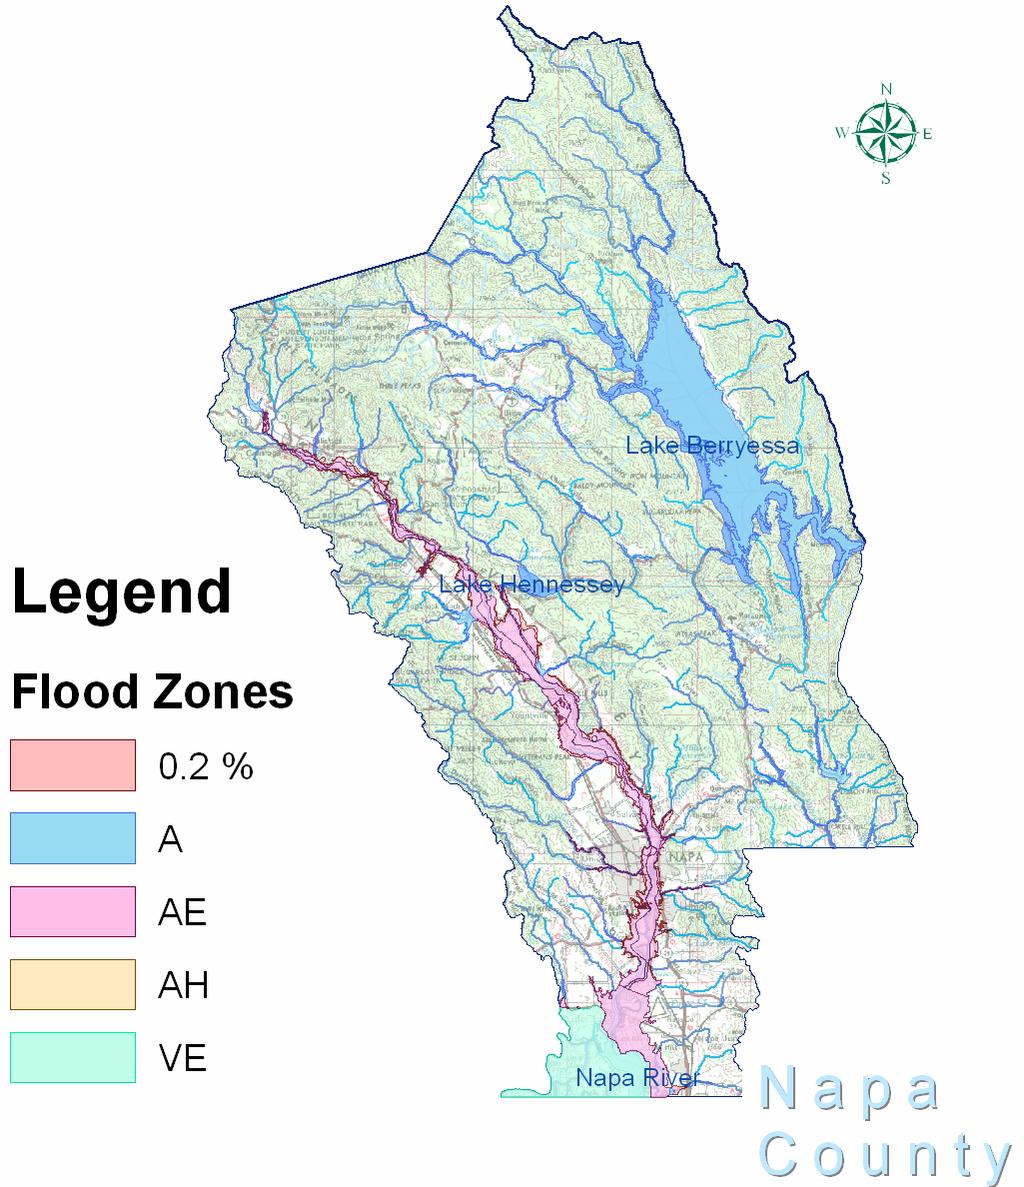 FEMA Flood Zones